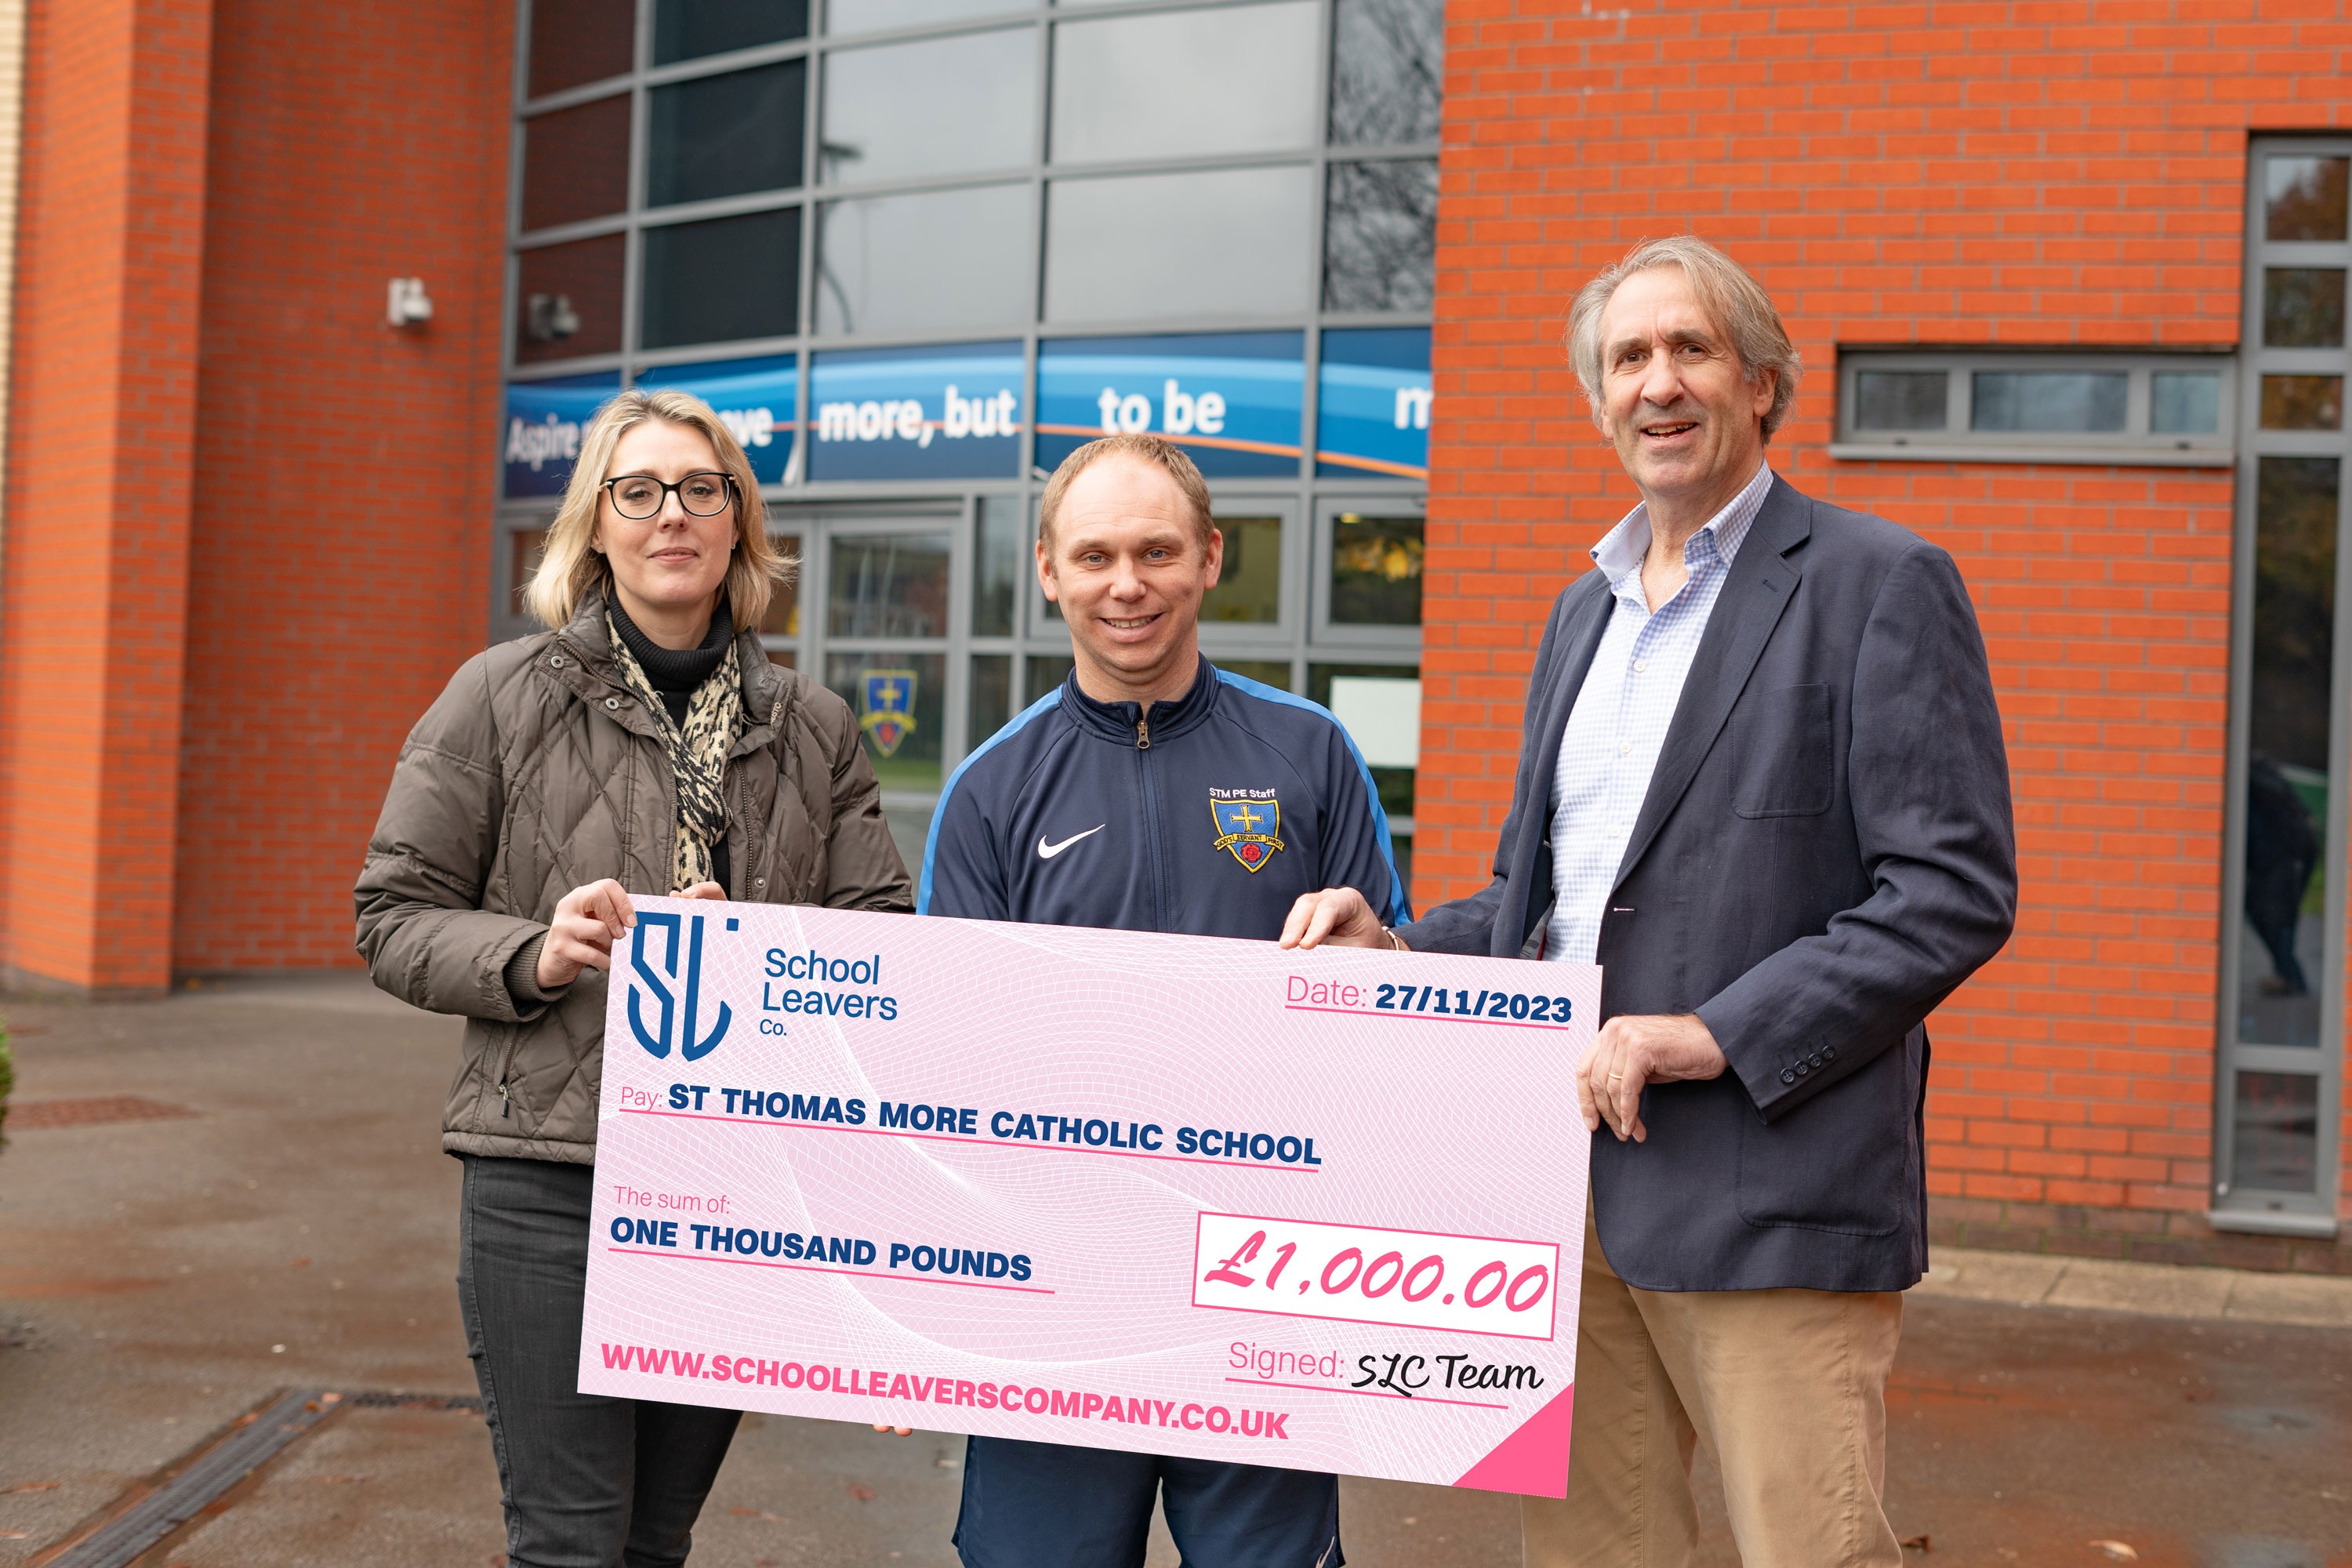 School Leavers Company Donates £1000 to St Thomas More Catholic School Hardship Fund